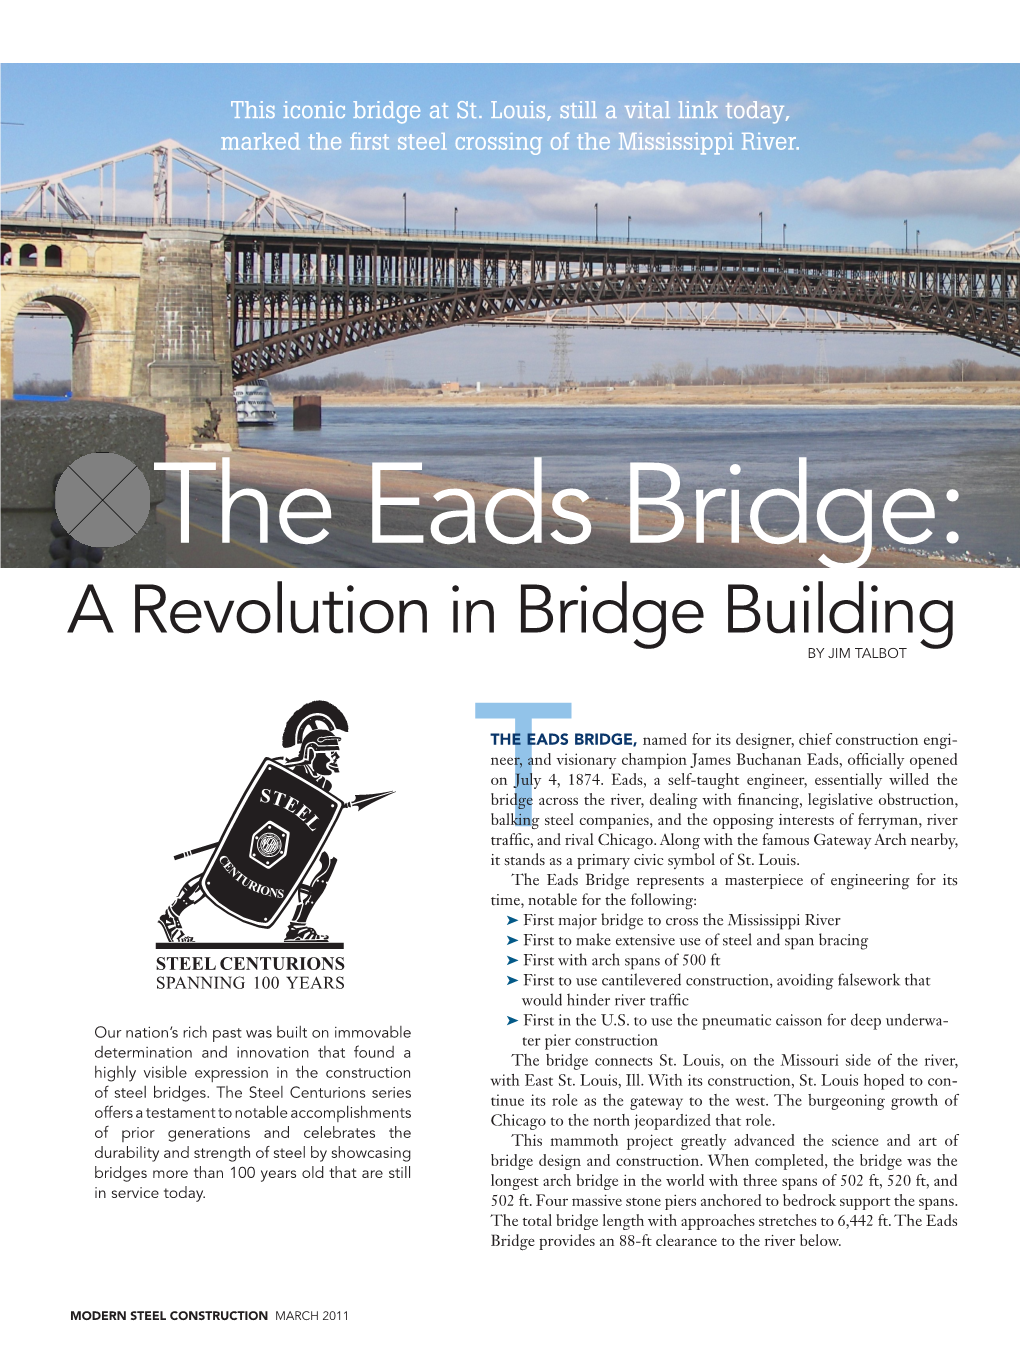 The Eads Bridge: a Revolution in Bridge Building by Jim Talbot